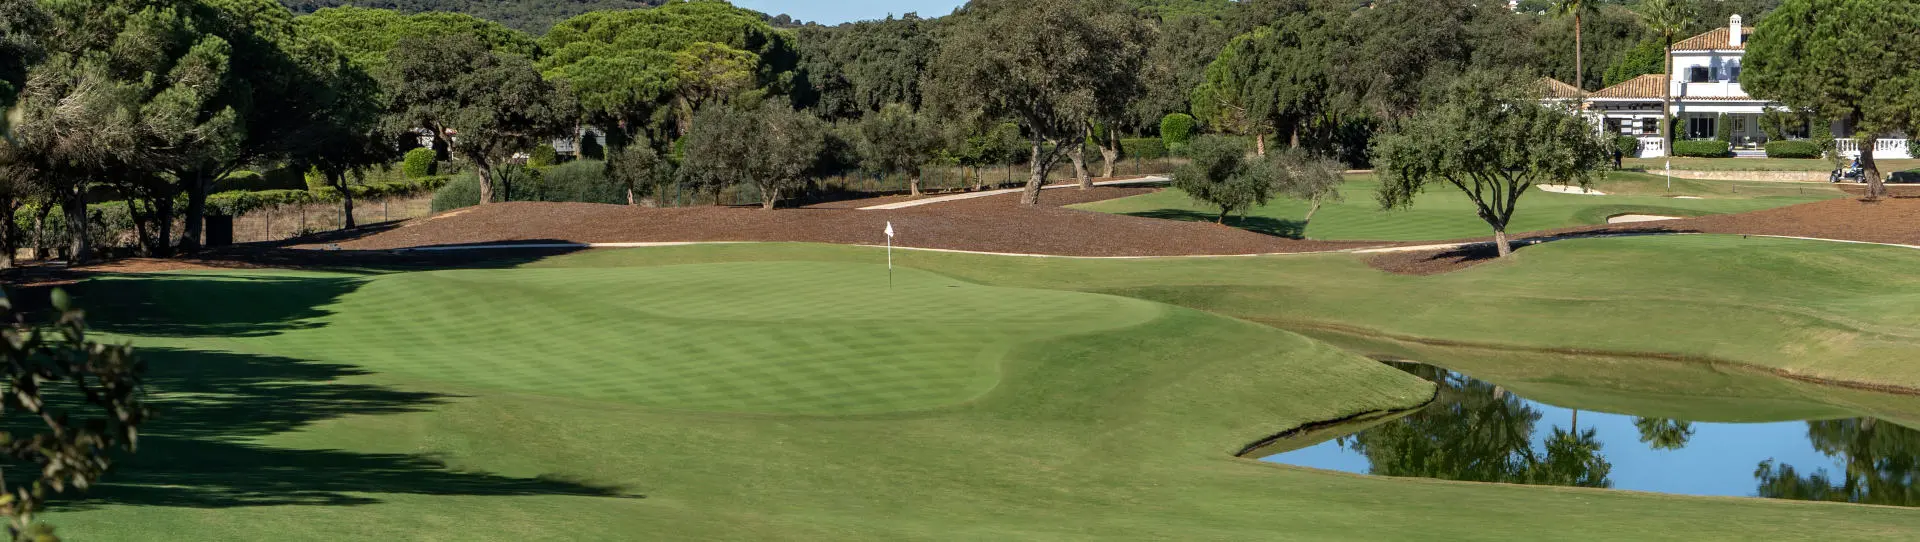 Spain golf courses - San Roque Club Old Course - Photo 2